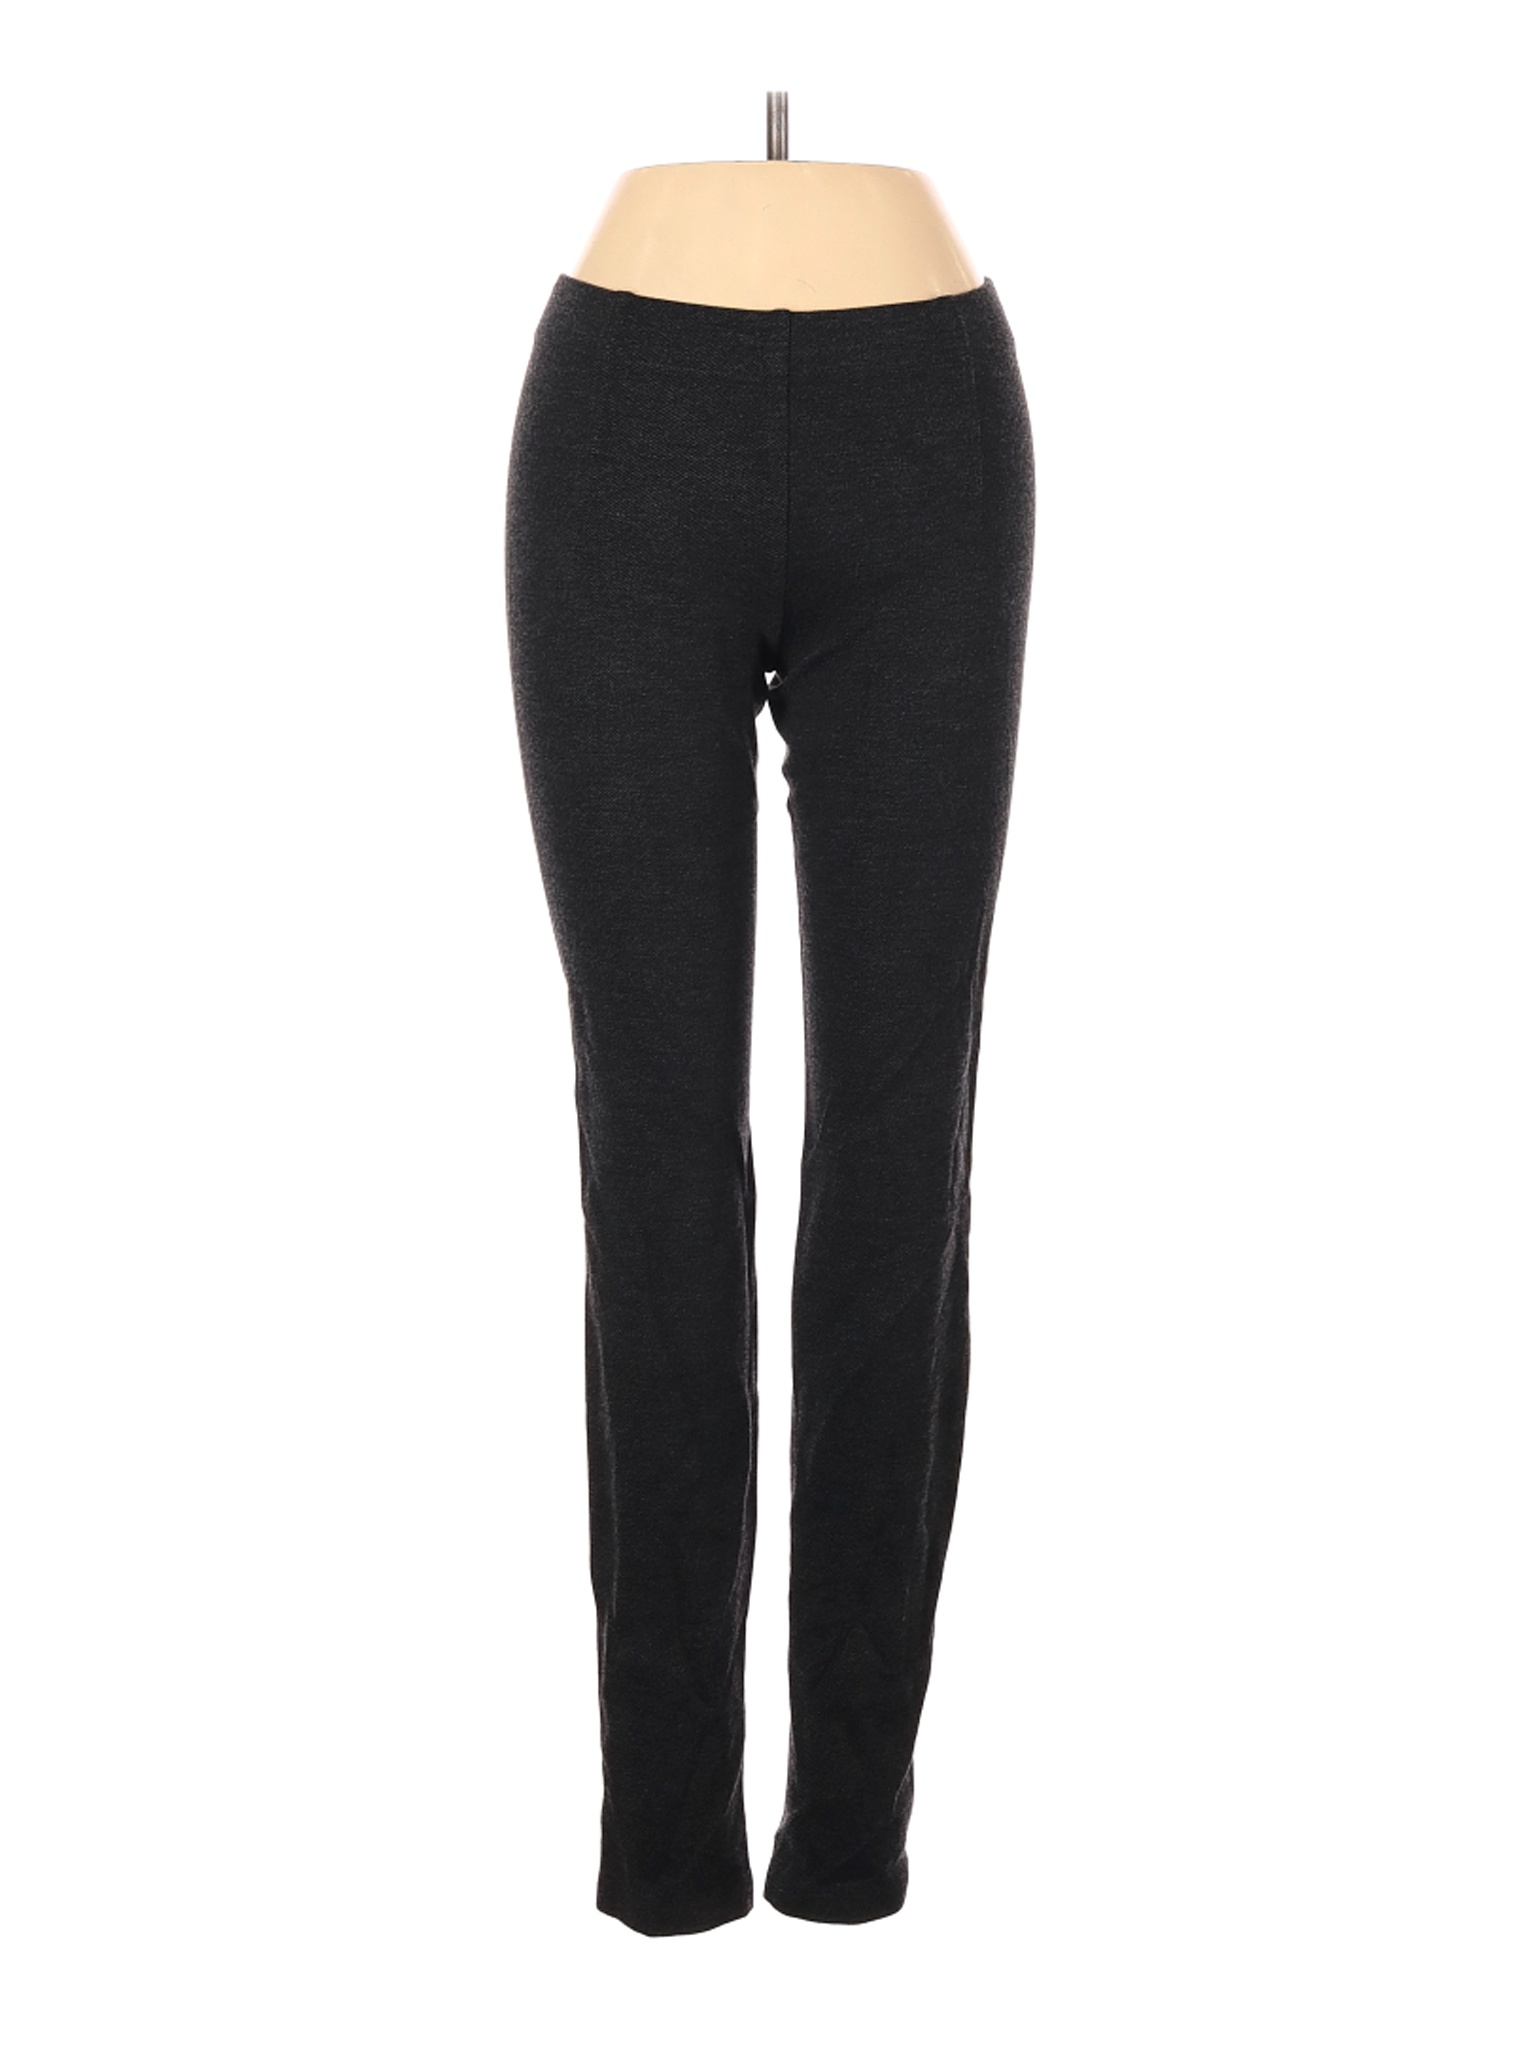 NWT Vince. Women Black Casual Pants XS | eBay